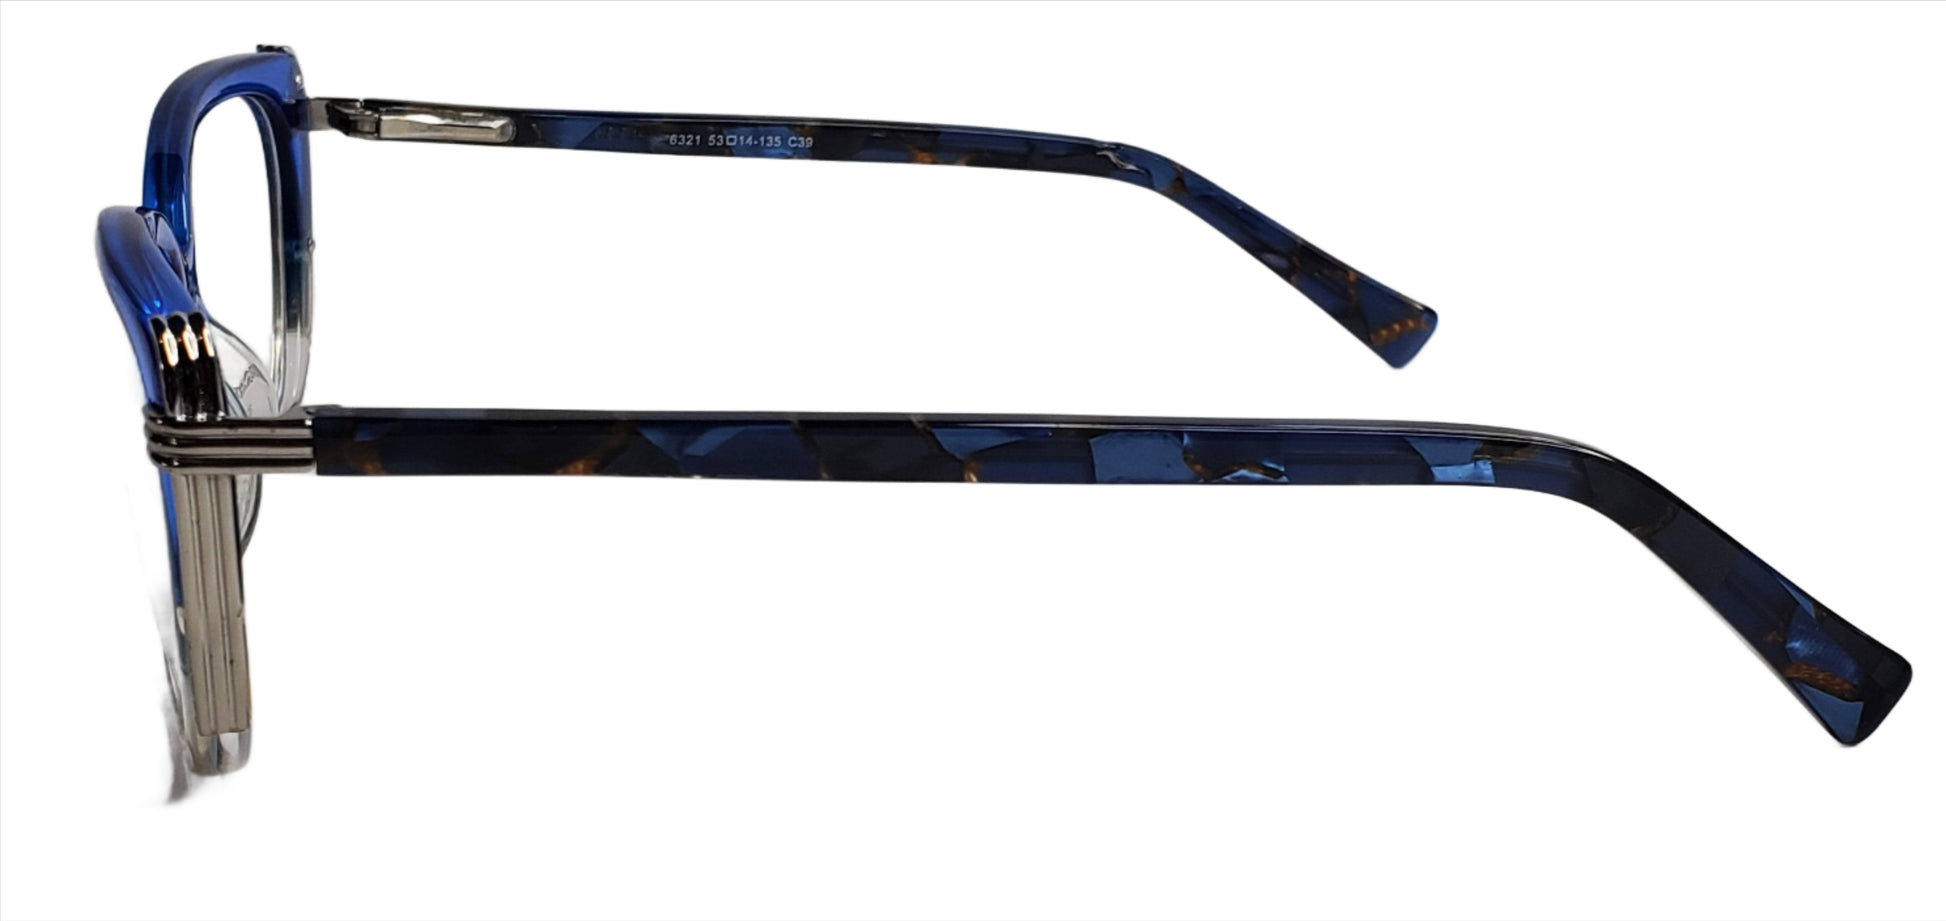 Dream HiMax 6321 Acetate Transparent Eyeglasses Blue - 